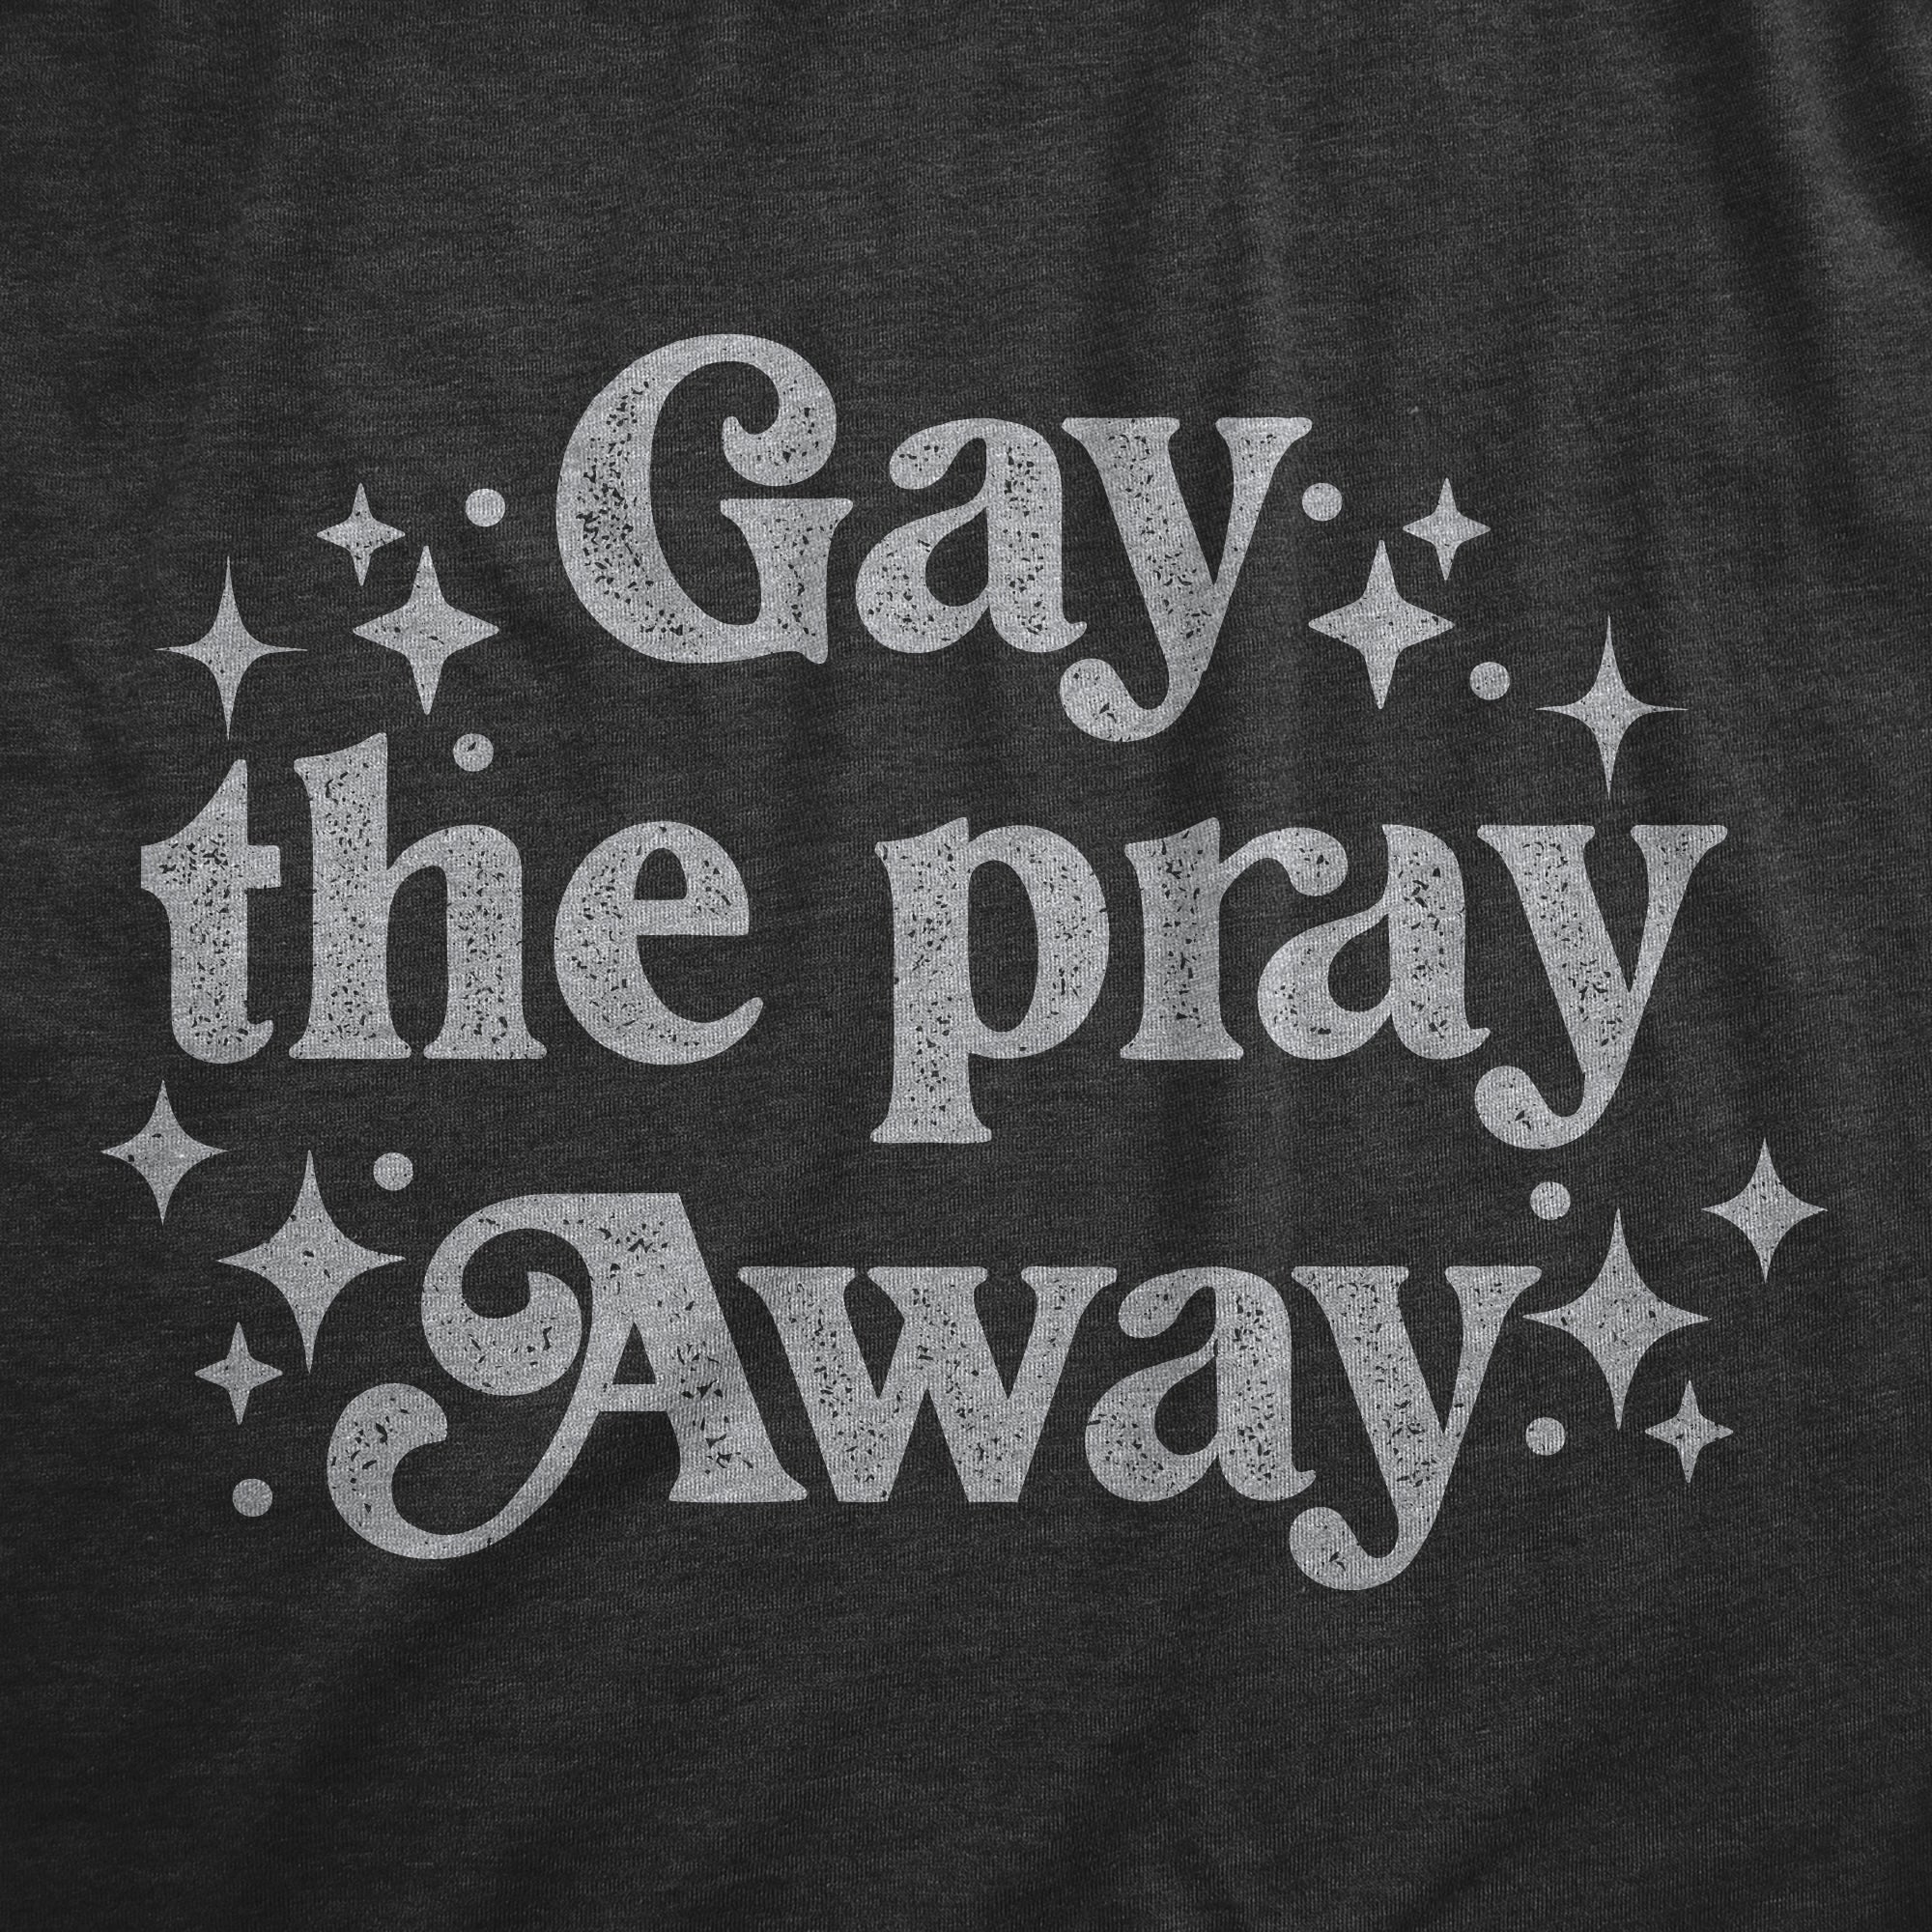 Funny Heather Black - GAY Gay The Pray Away Mens T Shirt Nerdy Motivational Tee